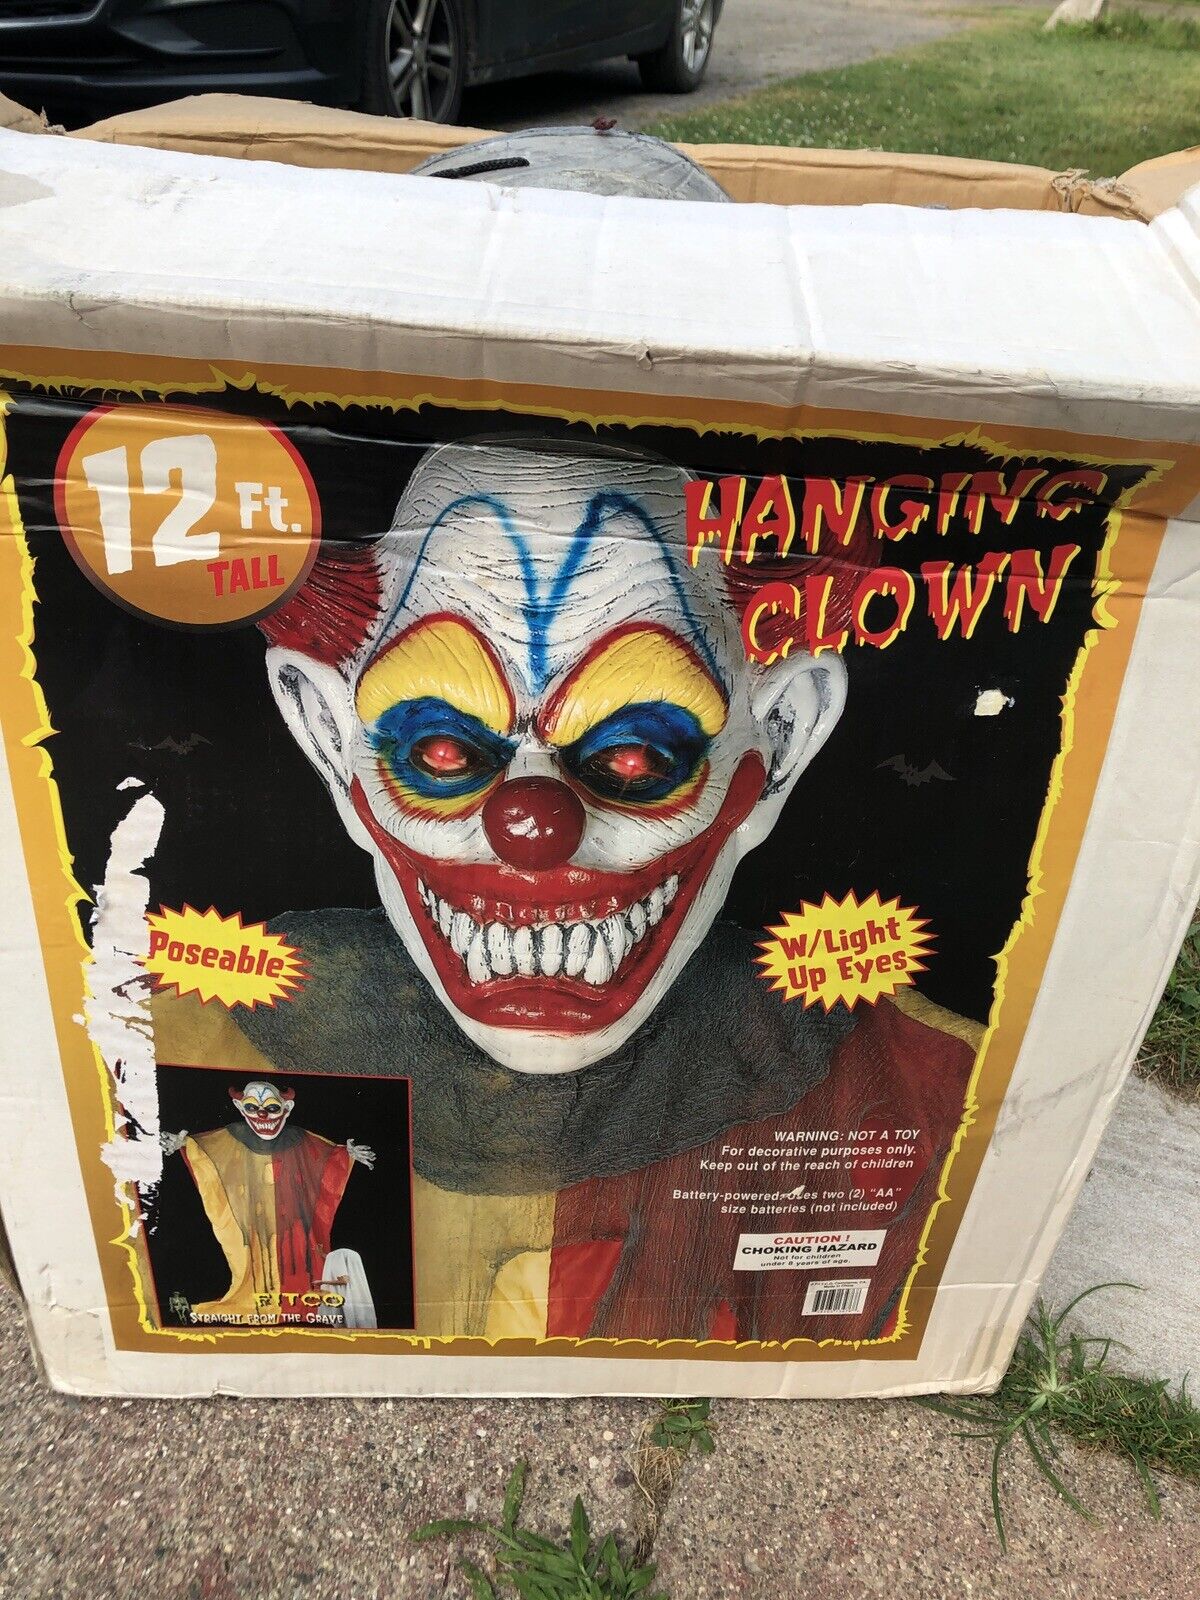 12 ft hanging clown fitco rare halloween prop spirit gemmy Light Up Htf Huge